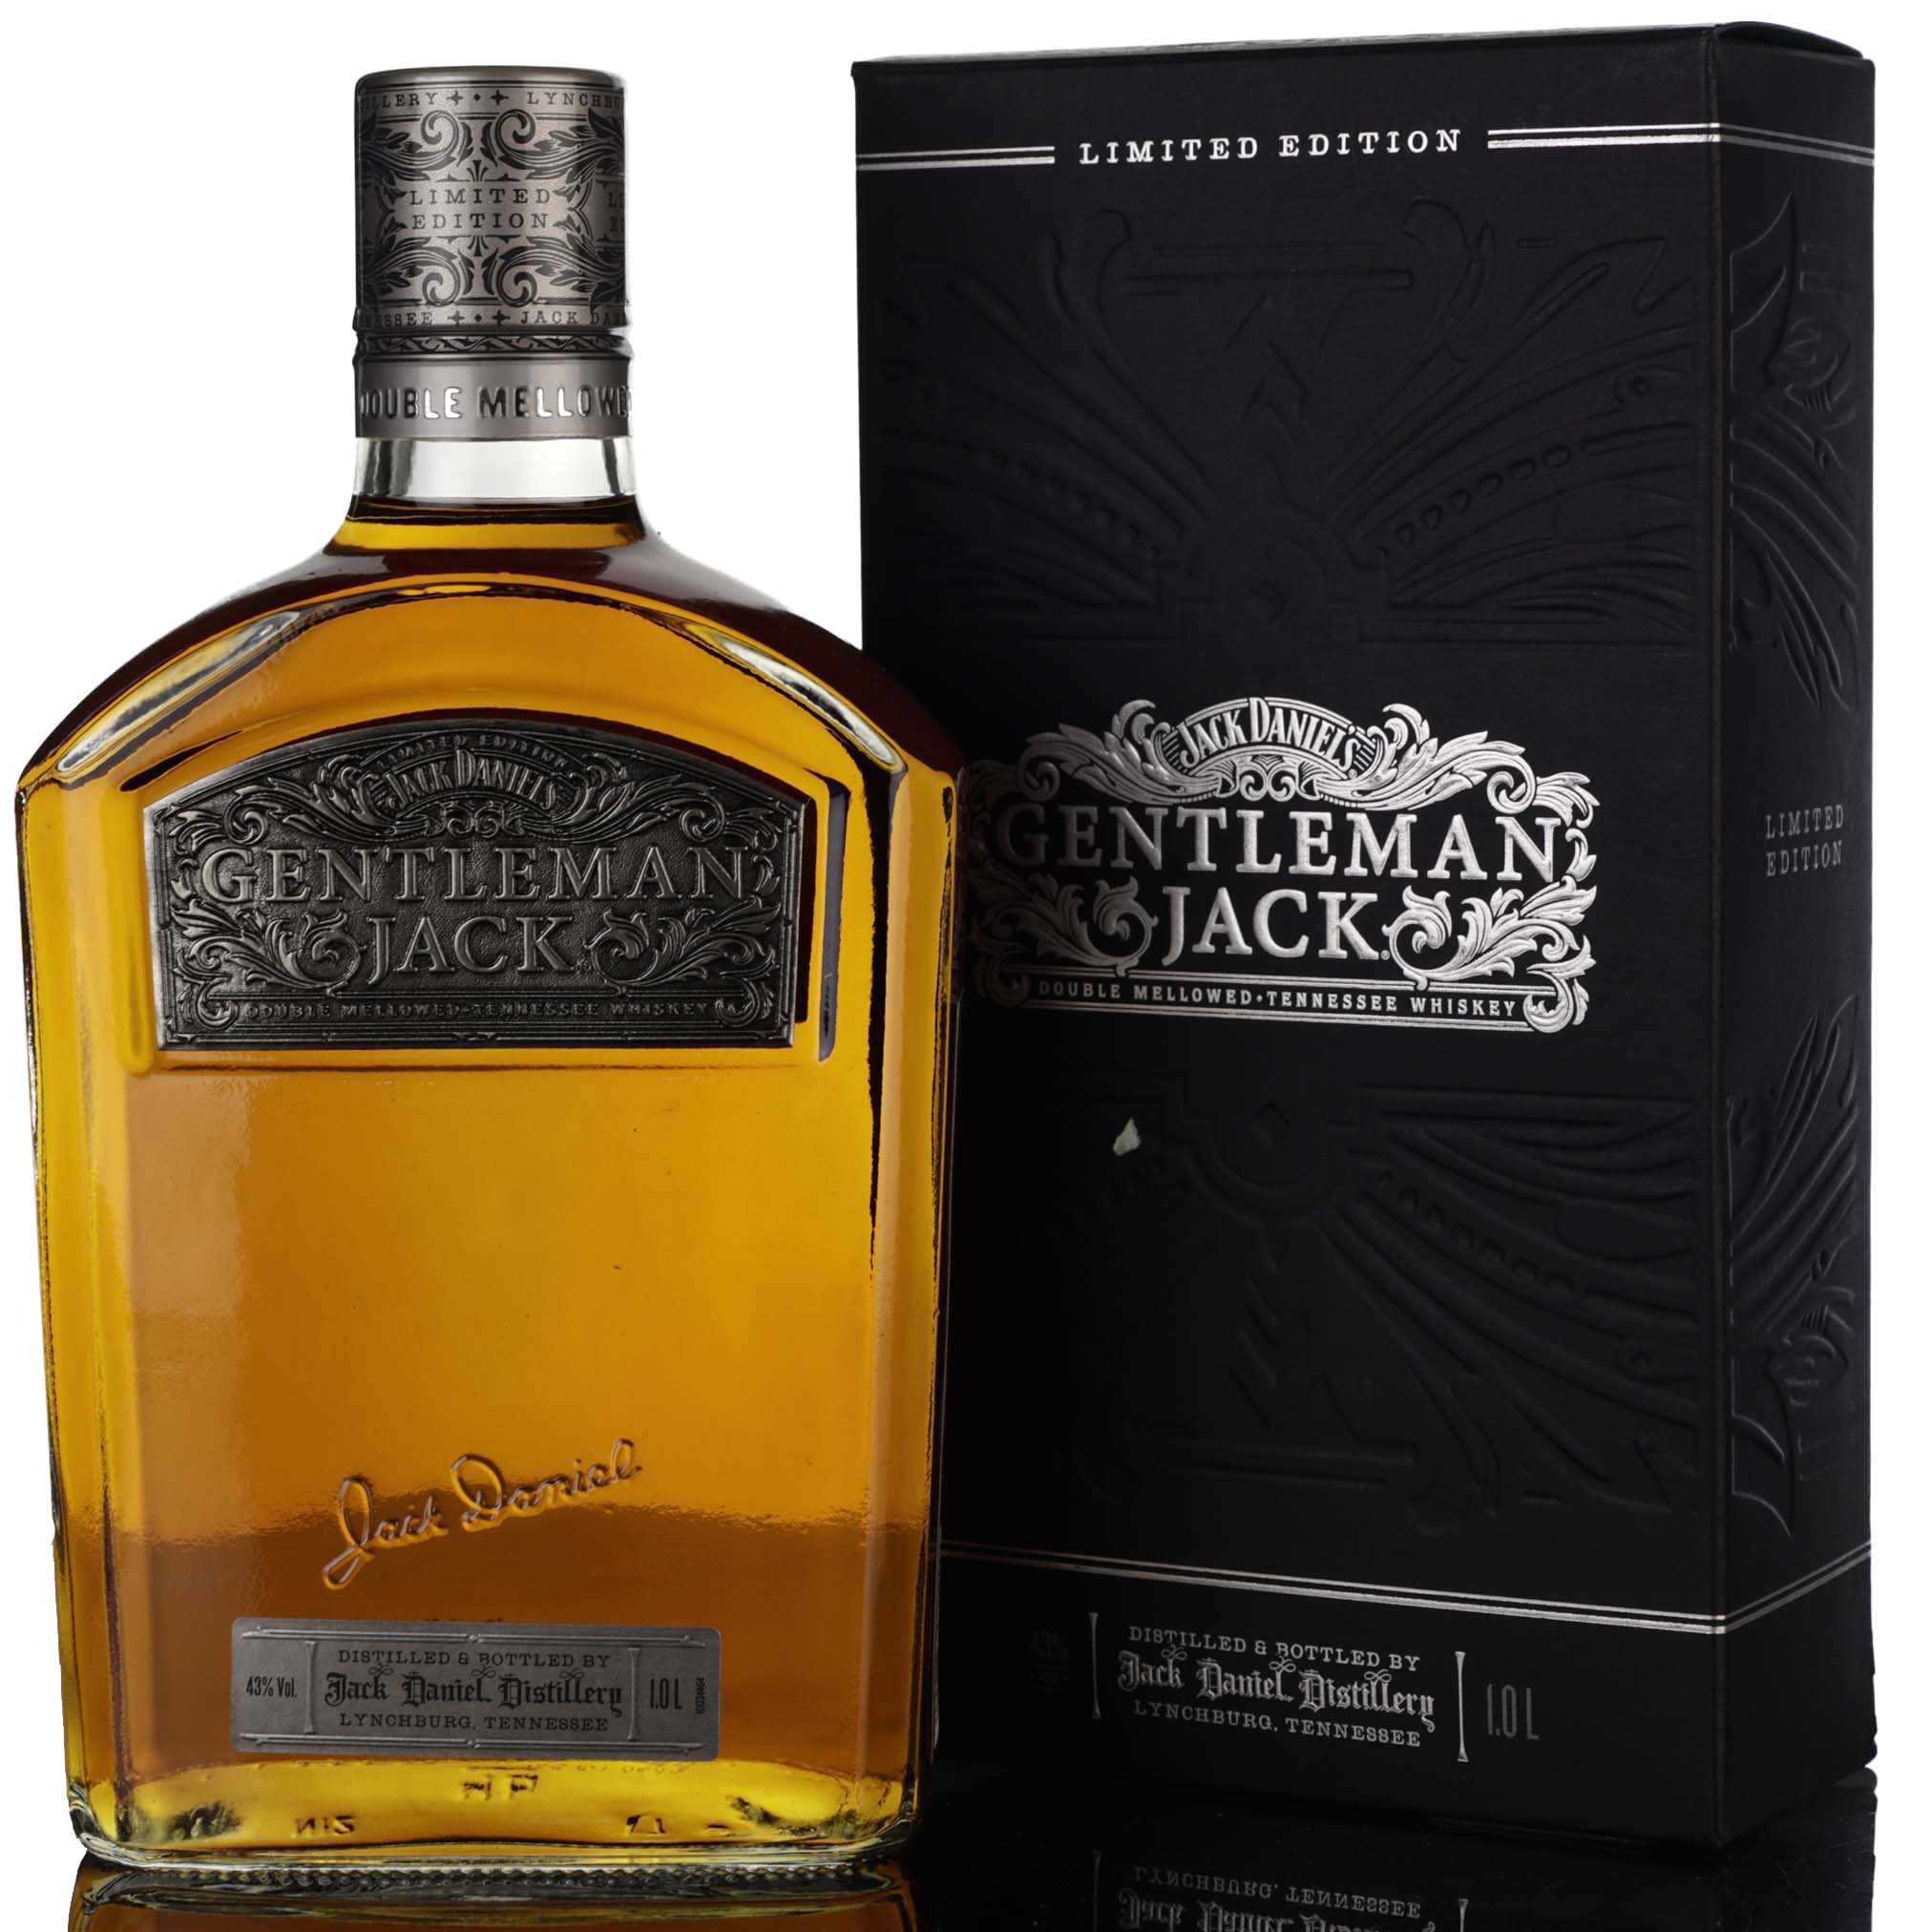 Jack Daniels Gentleman Jack Timepiece - Limited Edition - 1 Litre